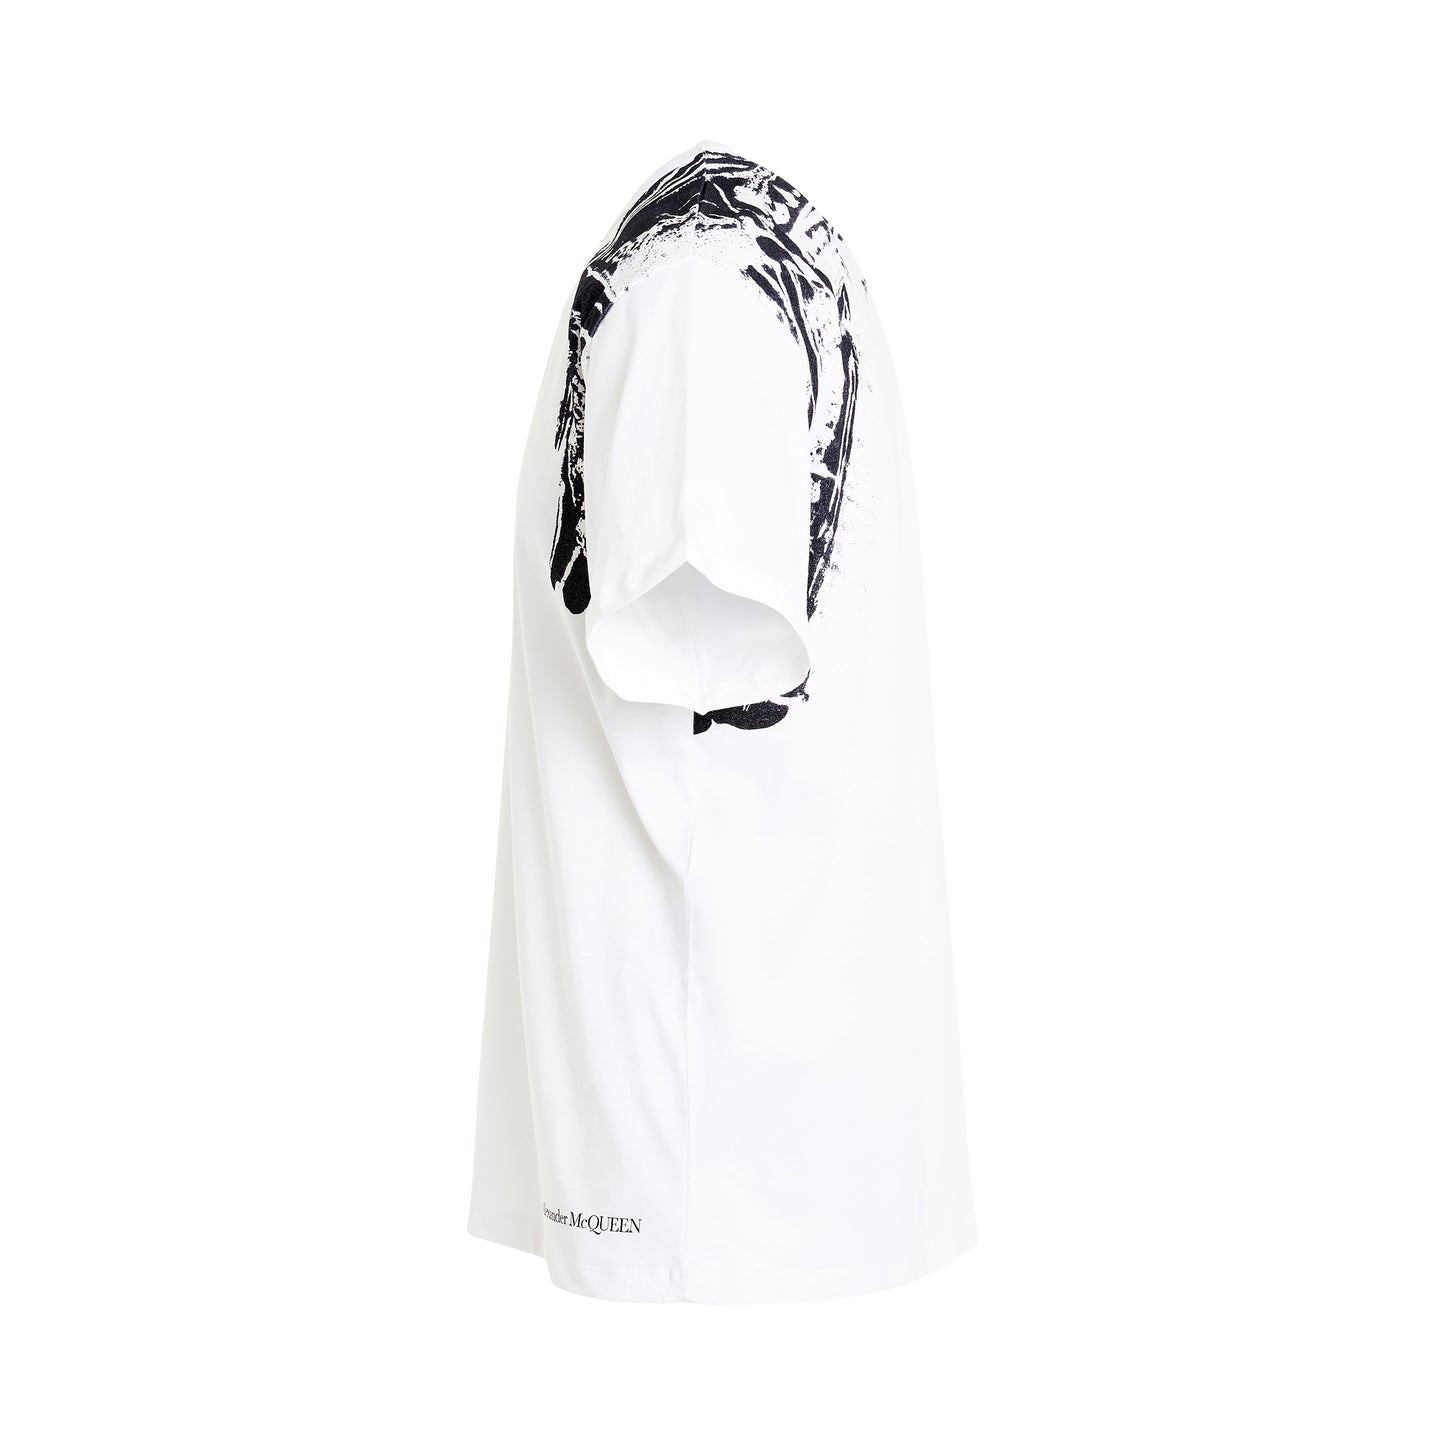 Harness Print T-Shirt in White/Black